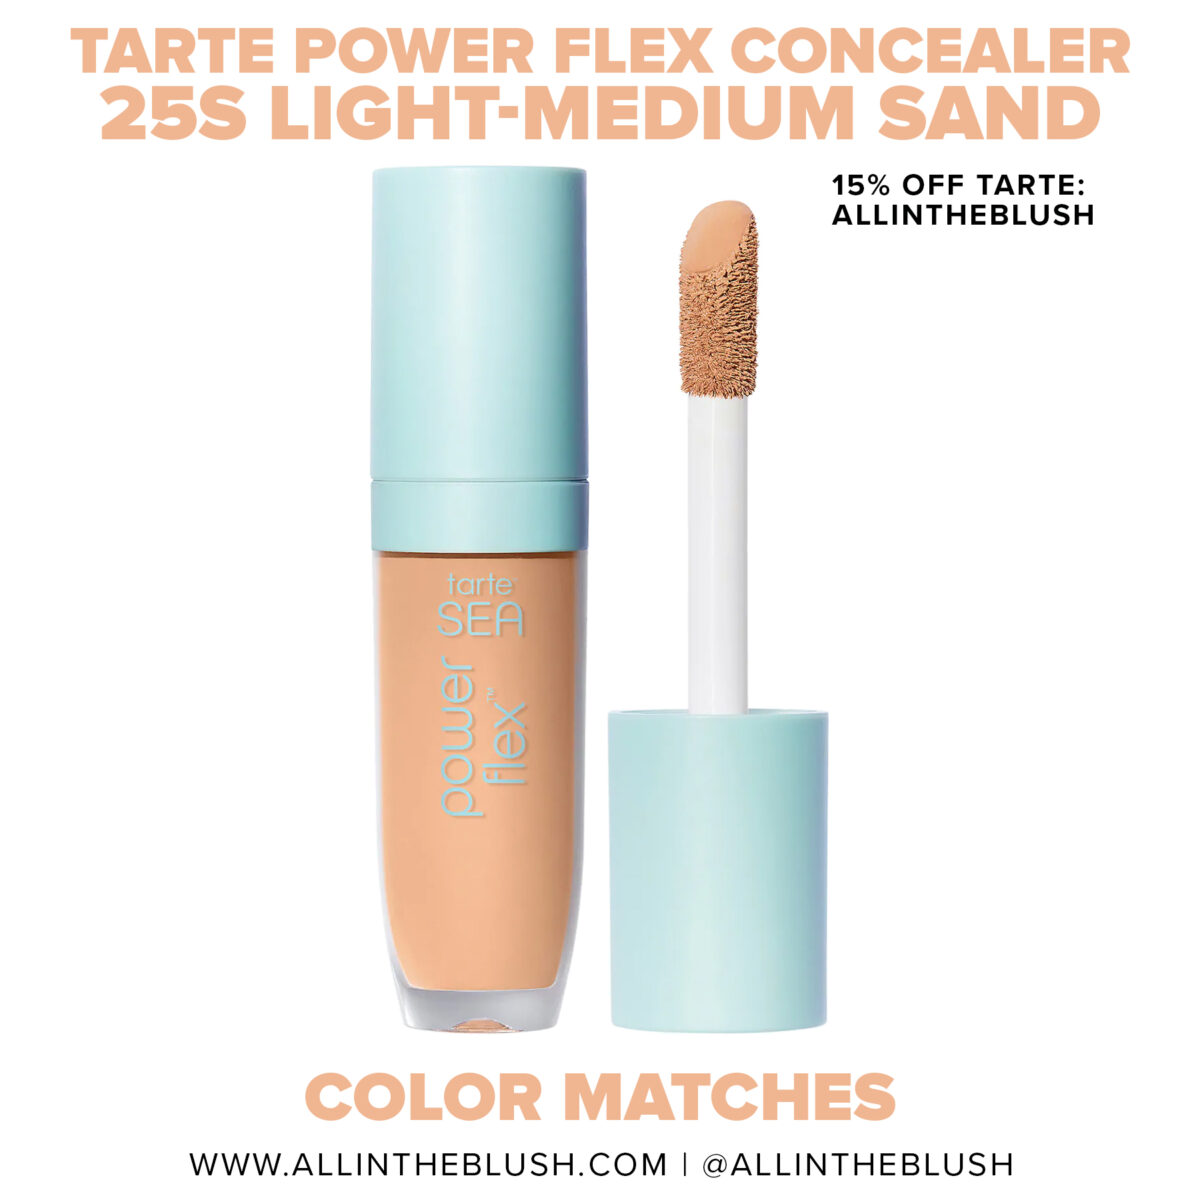 Tarte 25S Light-Medium Sand Power Flex Concealer Color Matches